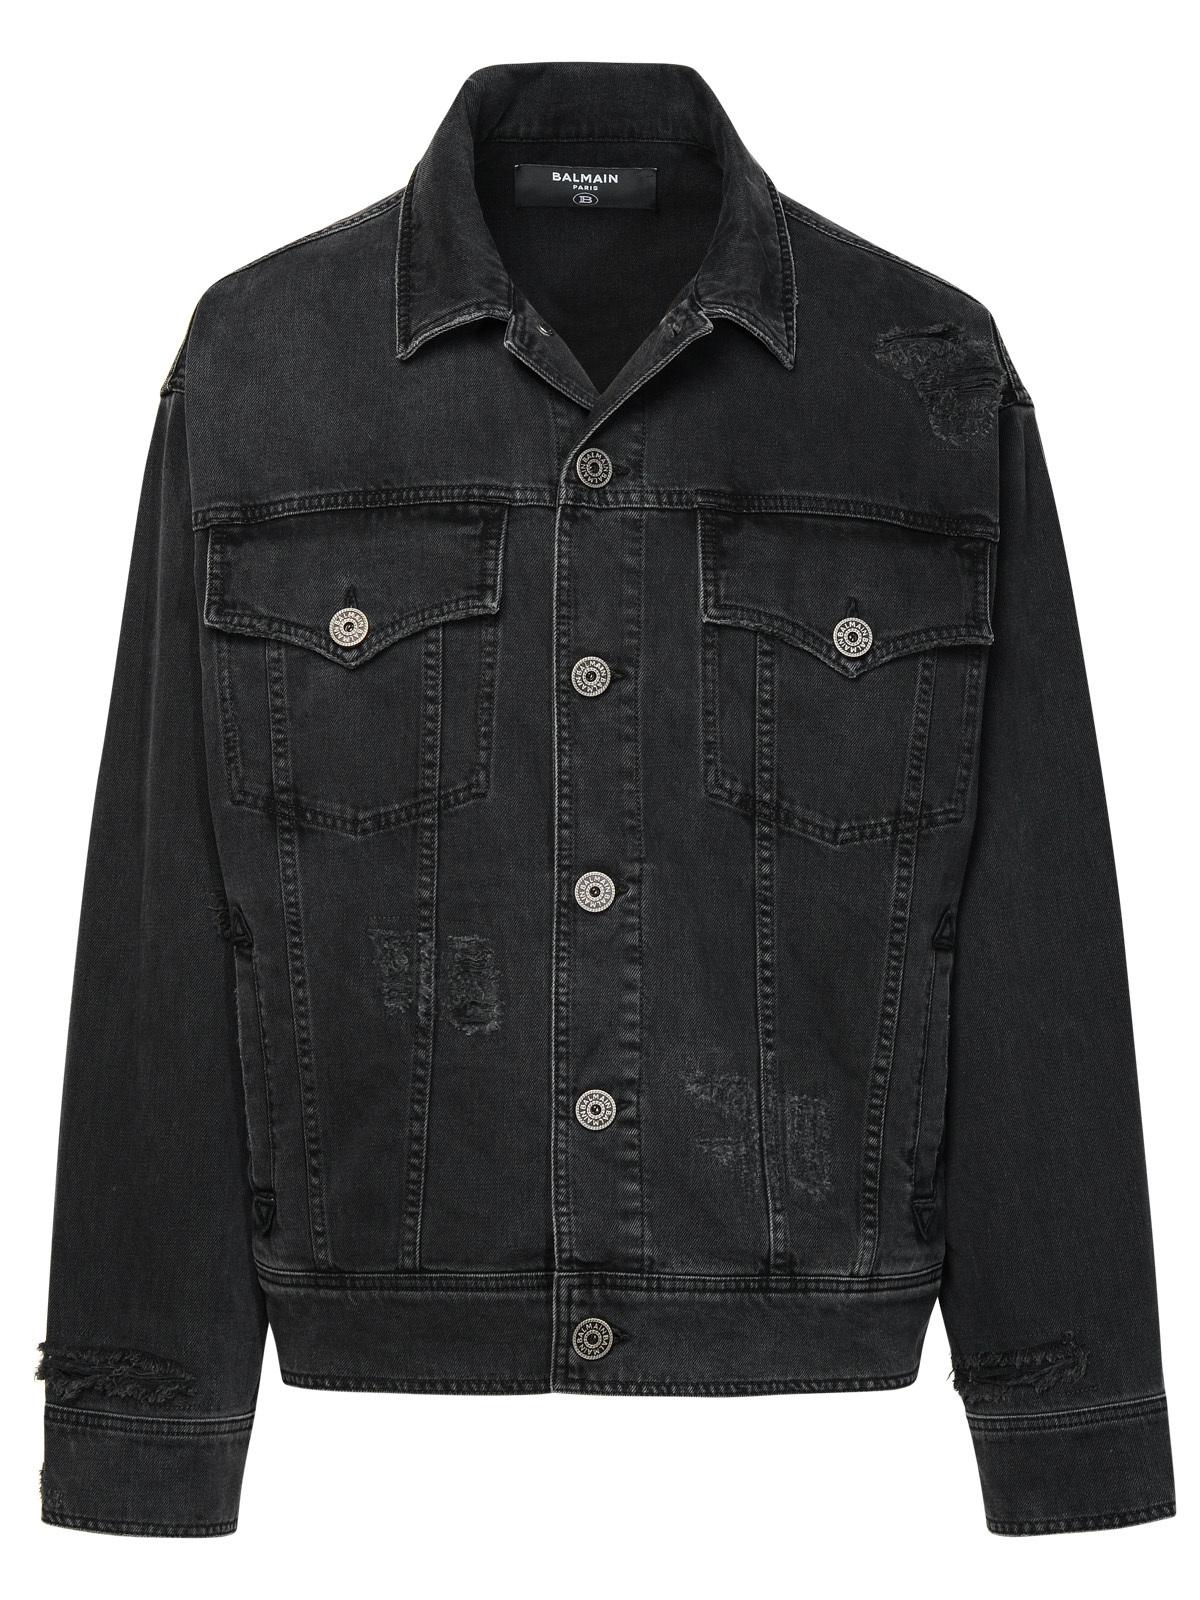 Balmain Black Cotton Jacket - 1